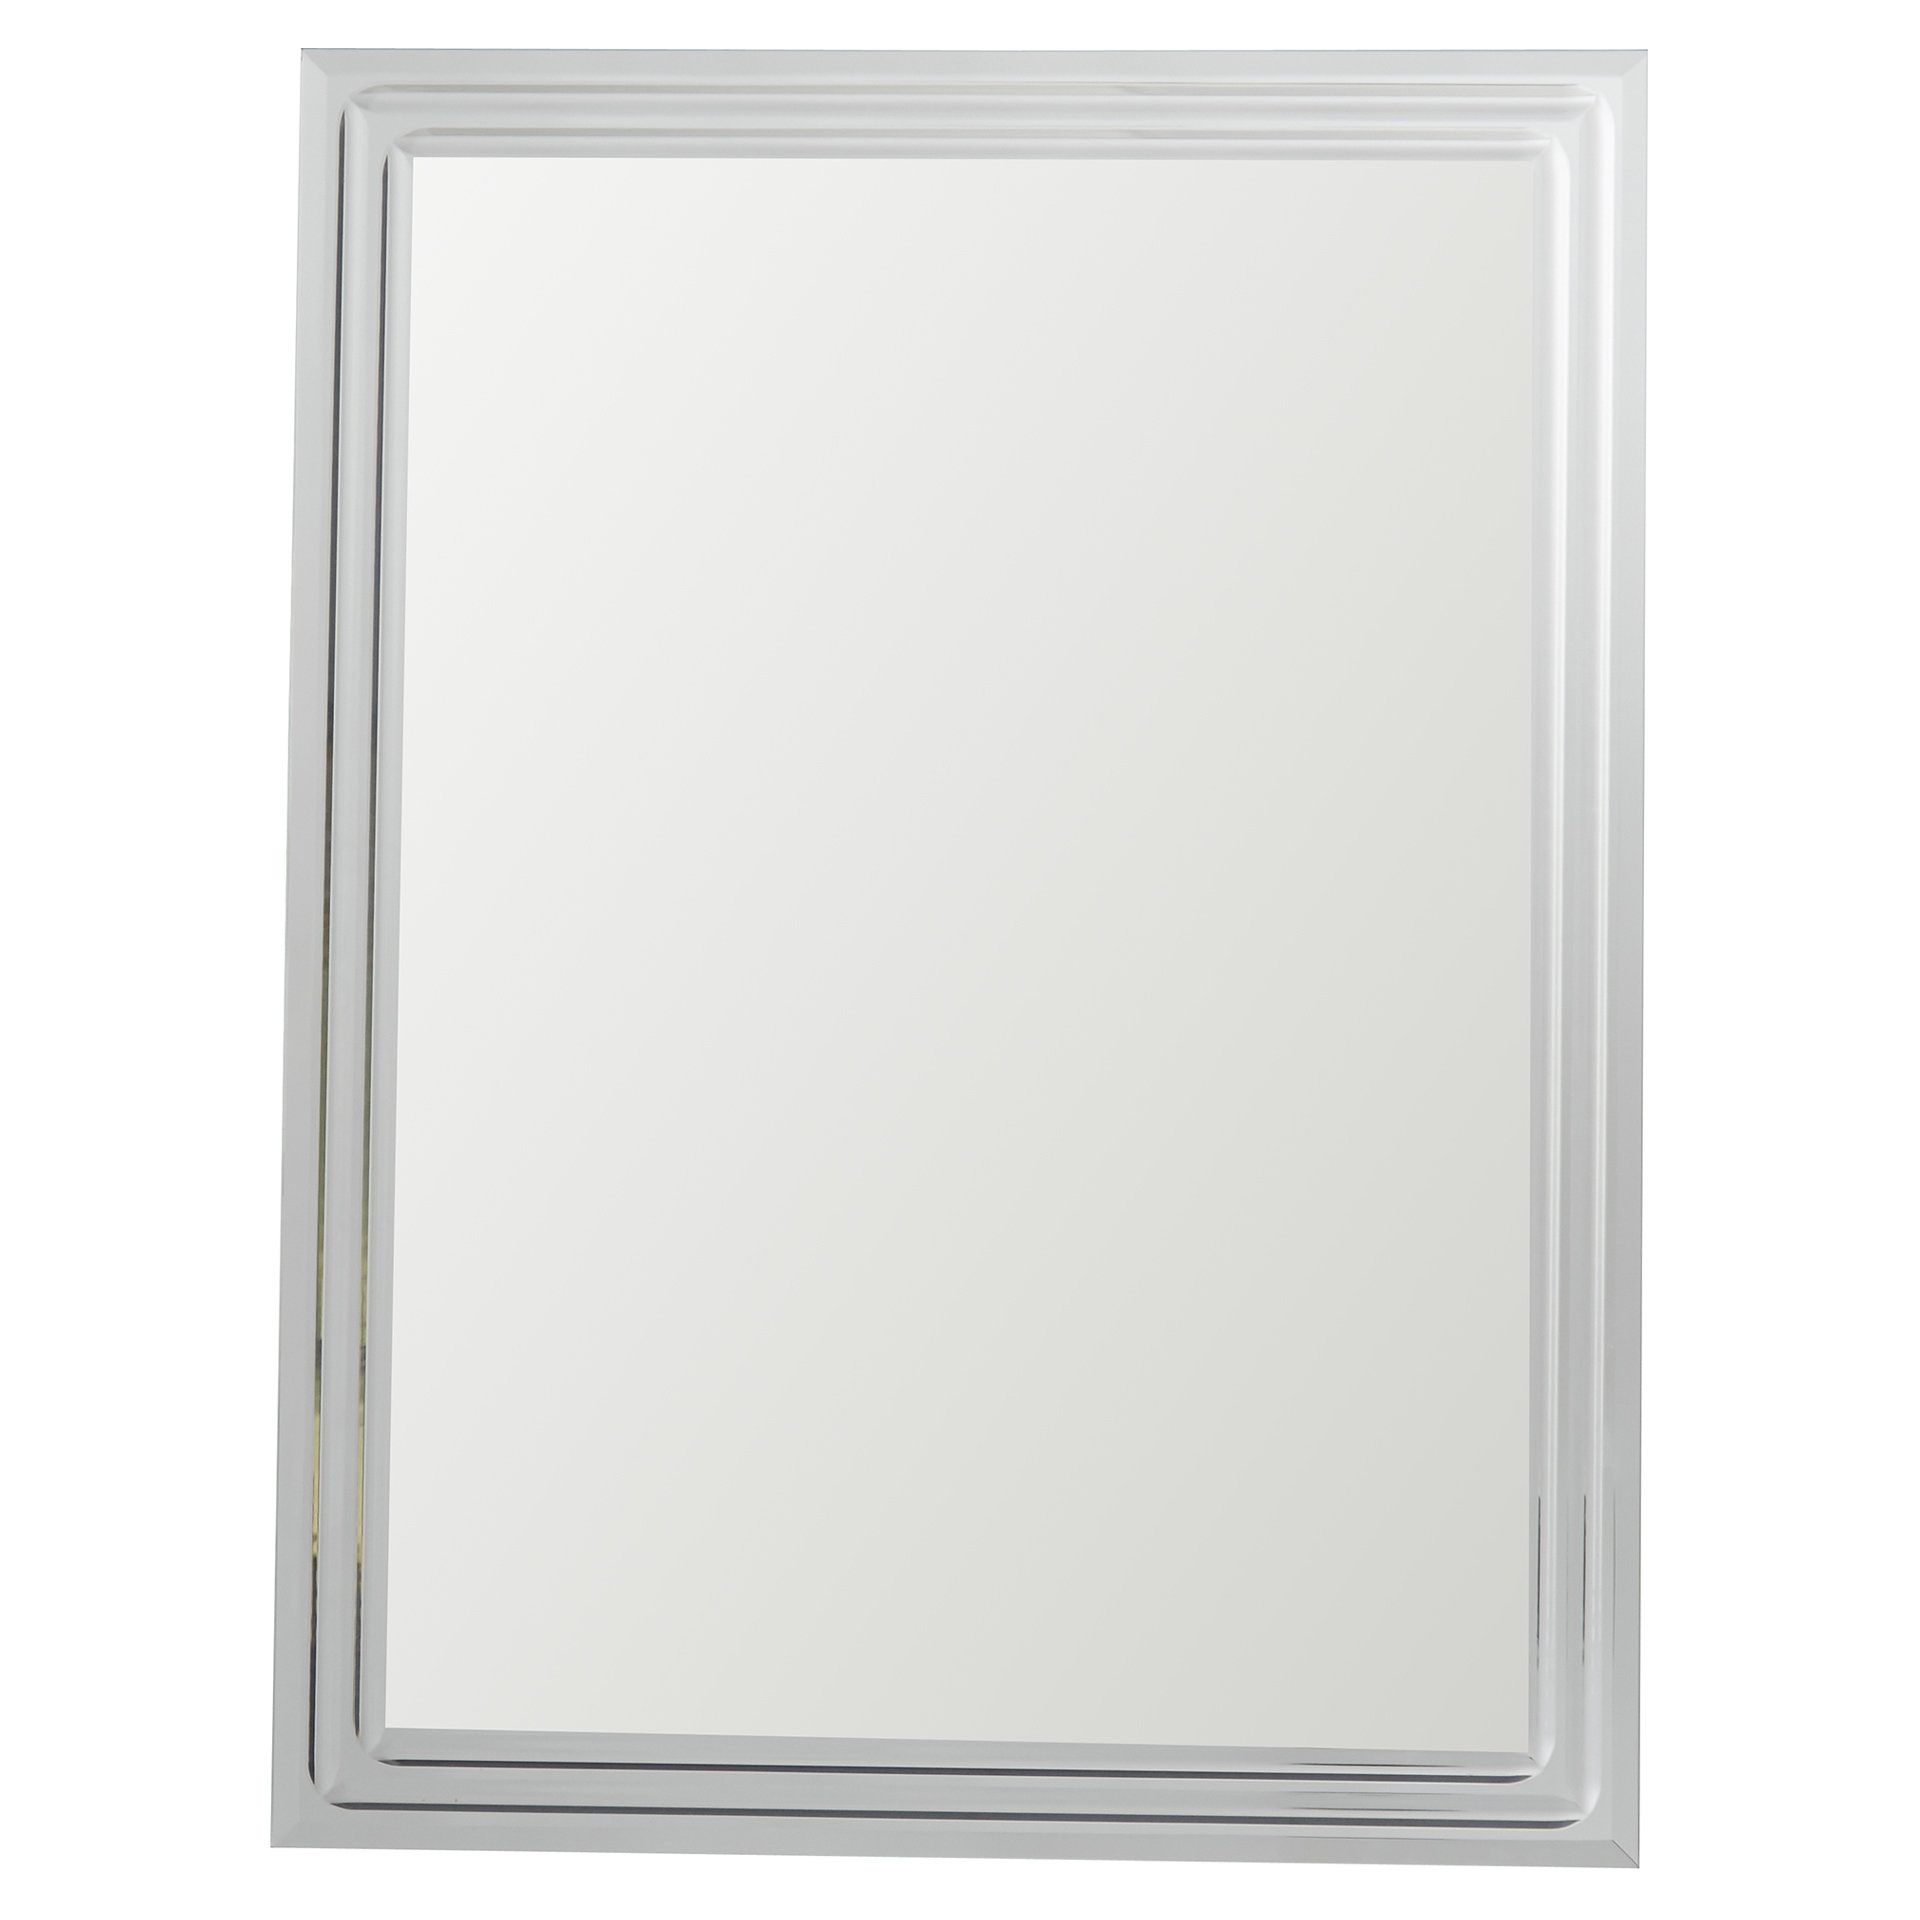 Tetbury Frameless Tri Bevel Wall Mirrors Inside Most Recent Tetbury Frameless Tri Bevel Wall Mirror (View 2 of 20)